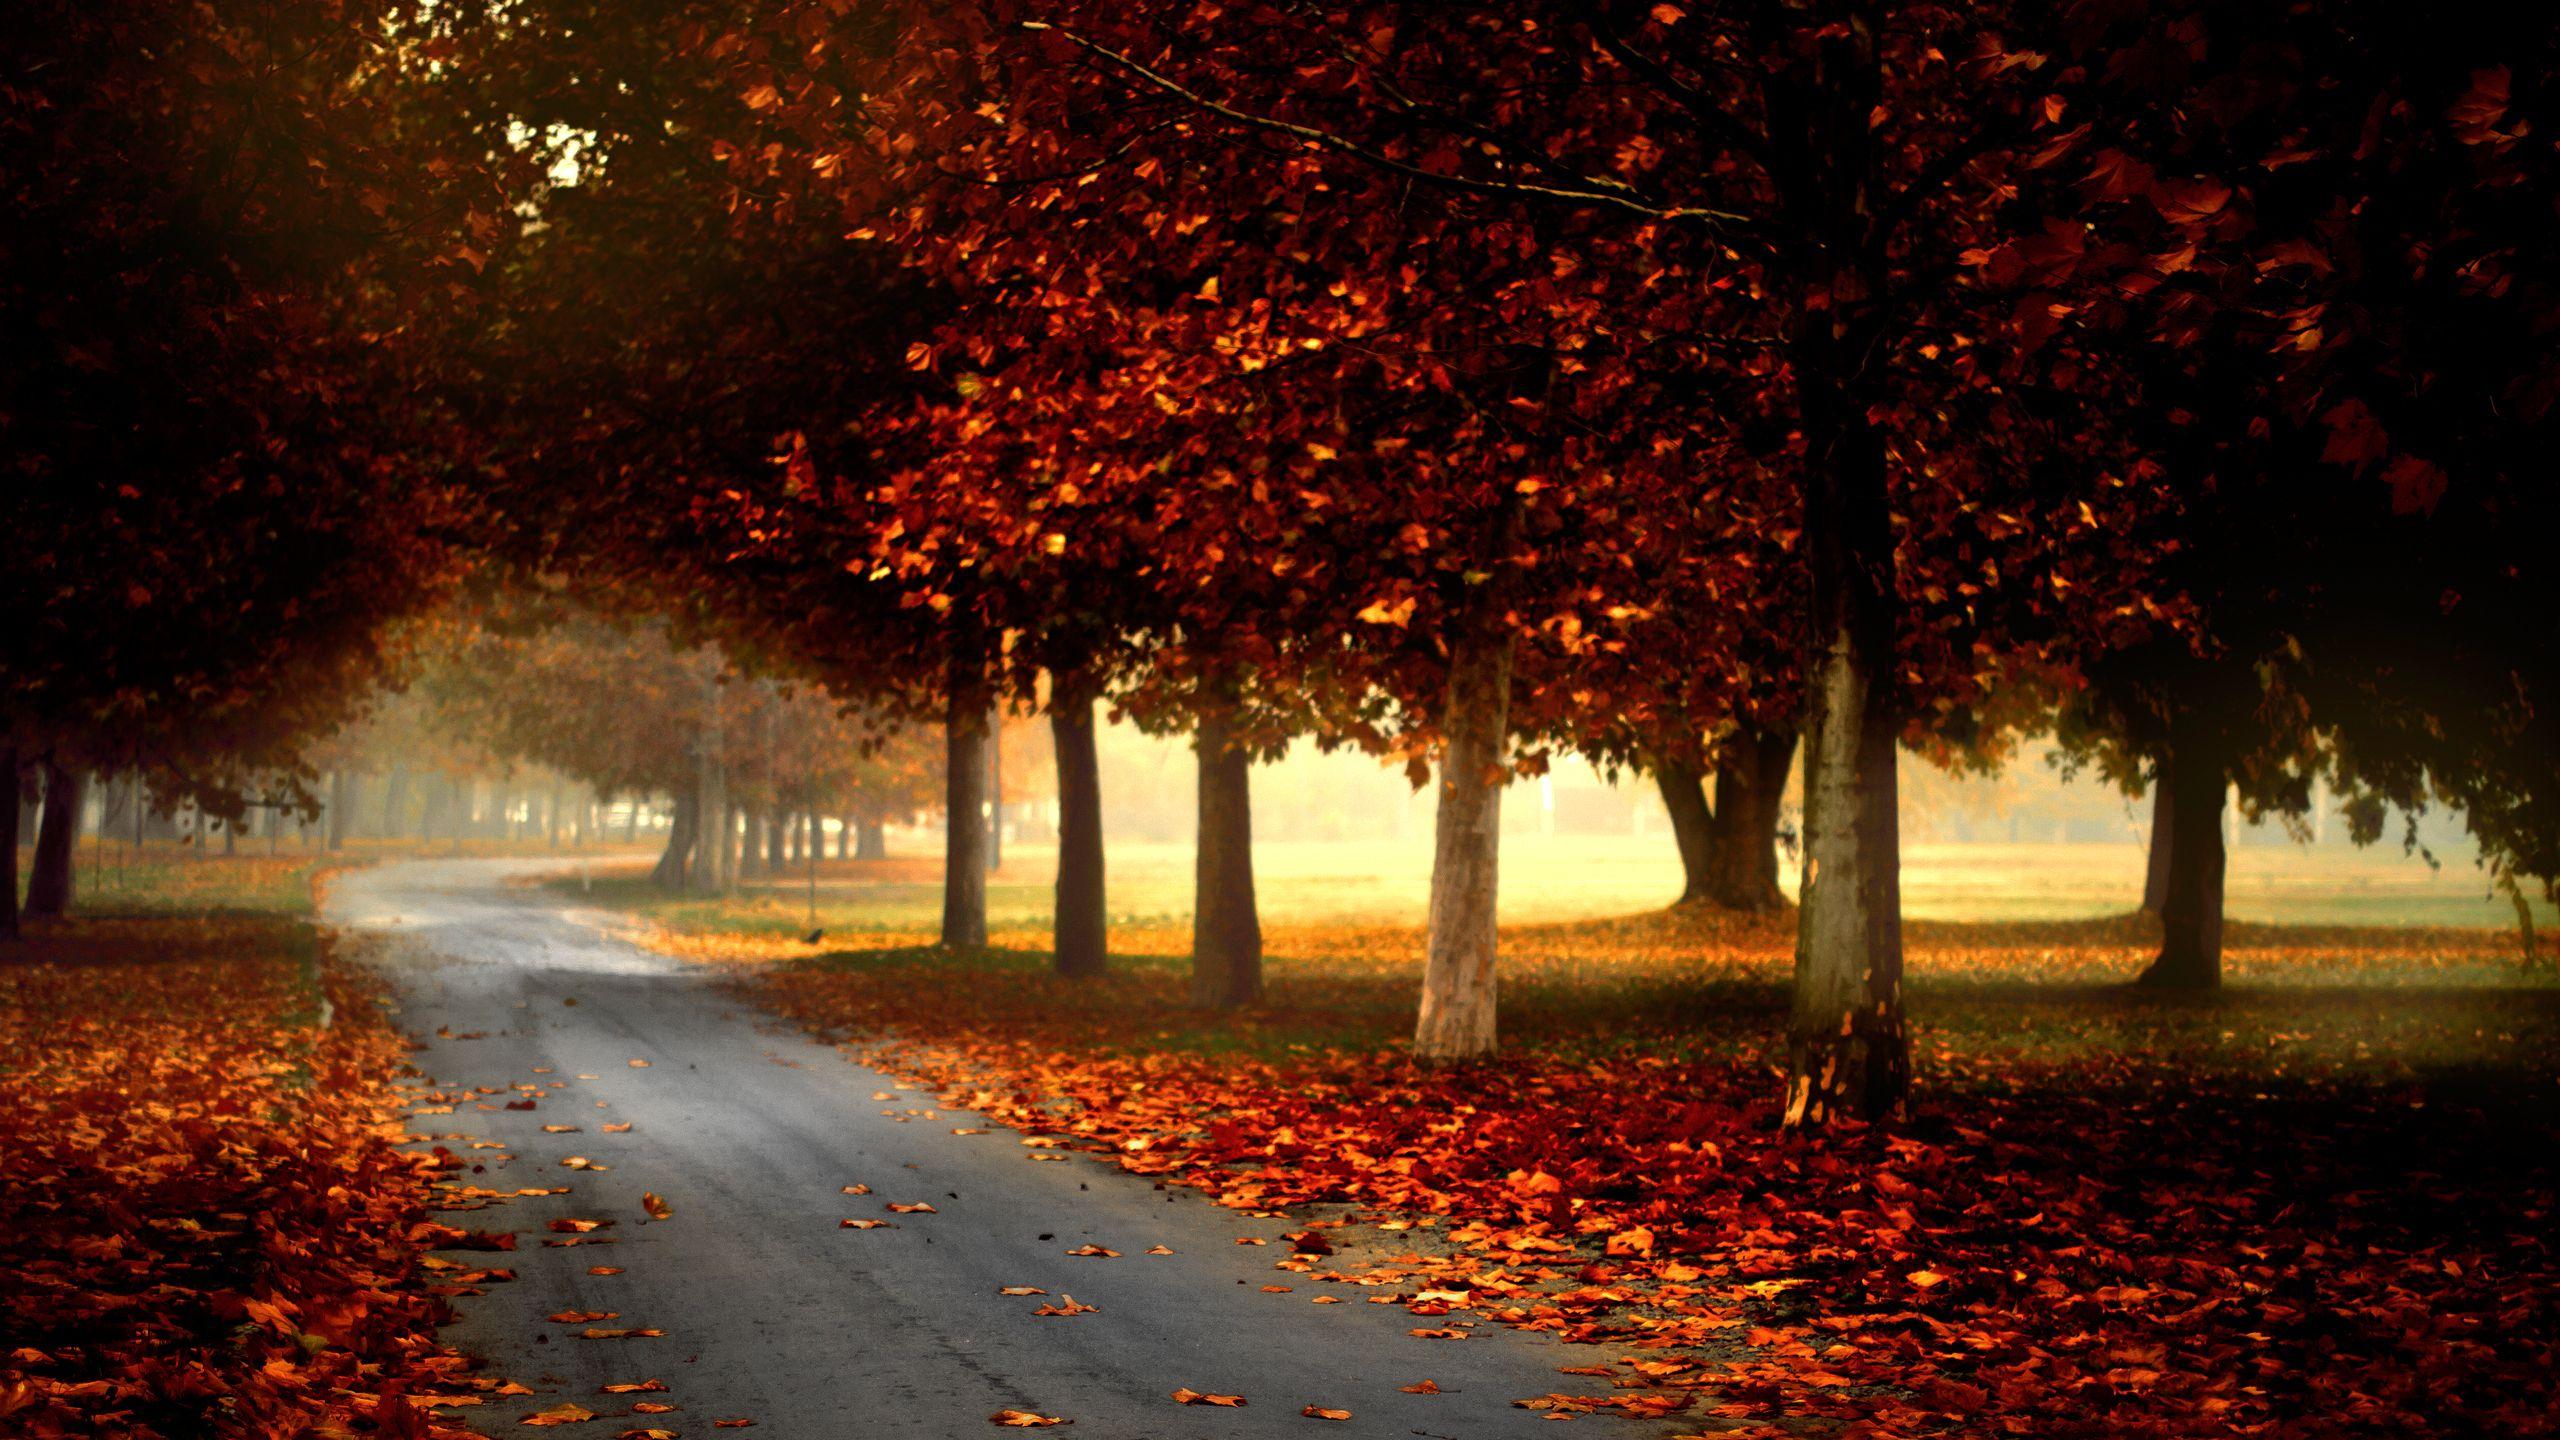 Country road in autumn wallpaper. Autumn wallpaper hd, Landscape